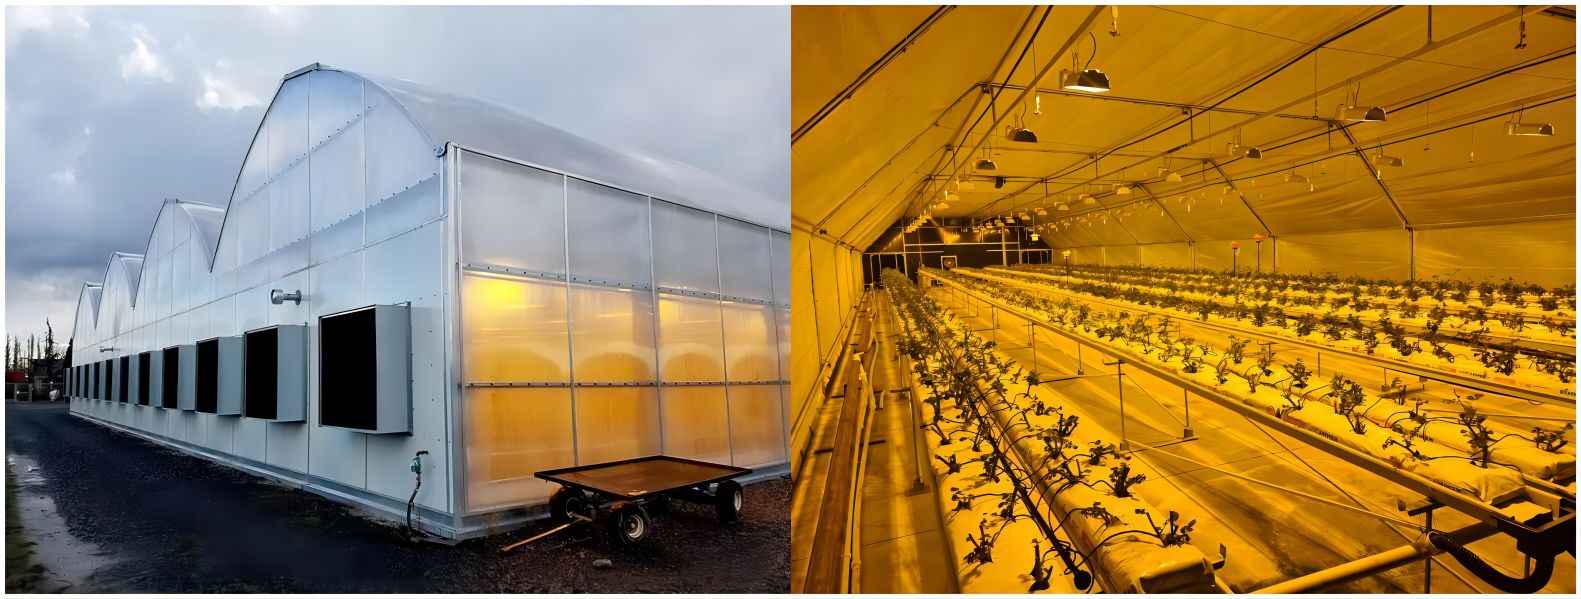 Bagaimana cara menggunakan rumah kaca yang kekurangan cahaya untuk menanam rami industri?